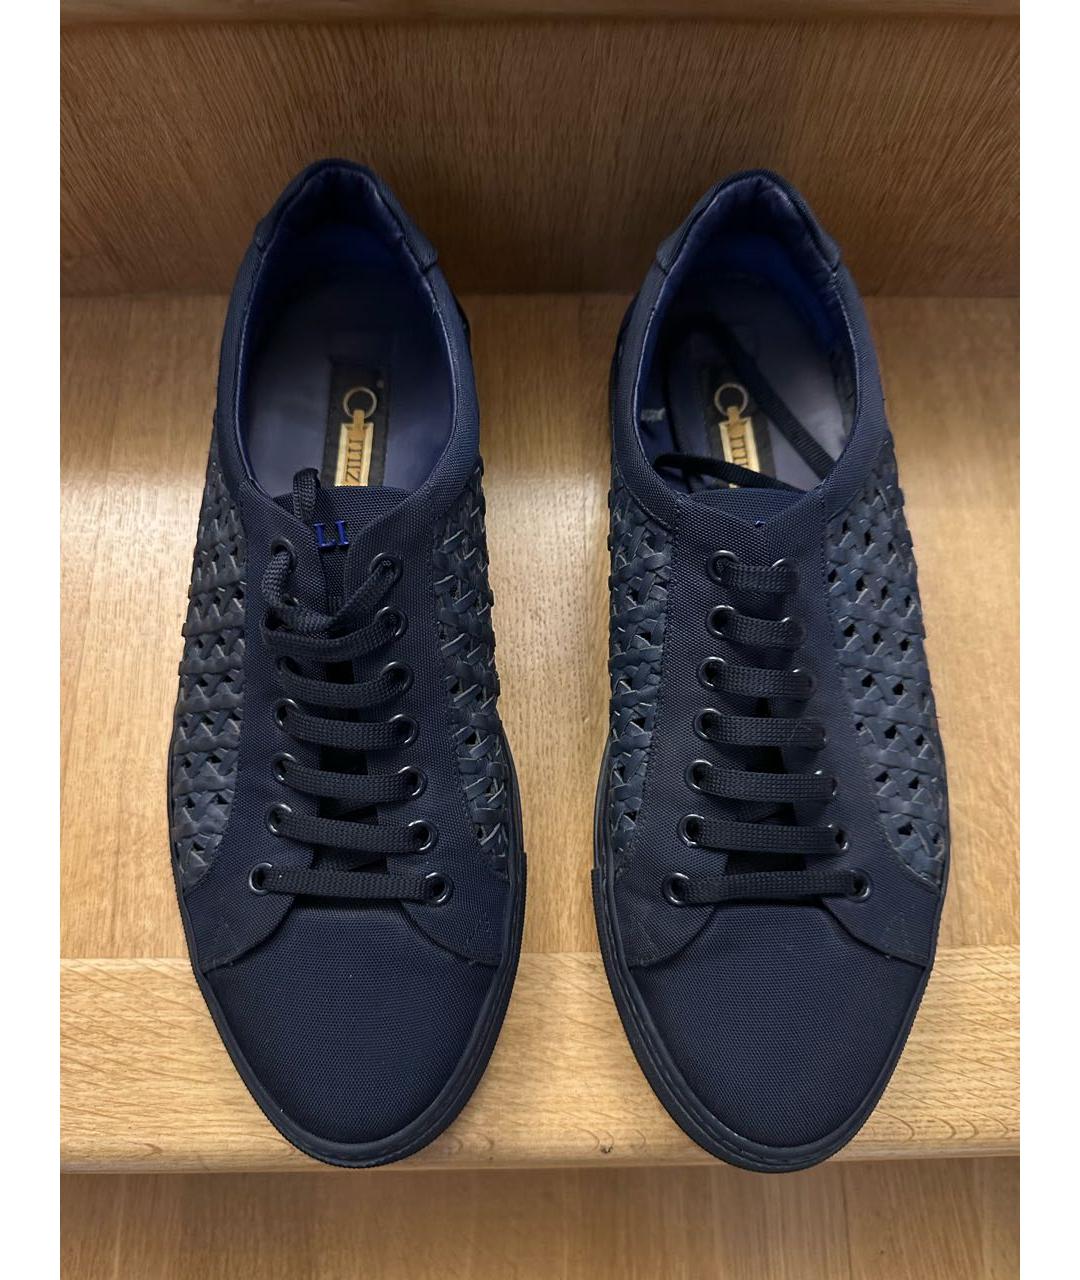 ZILLI Темно-синие низкие кроссовки / кеды, фото 2